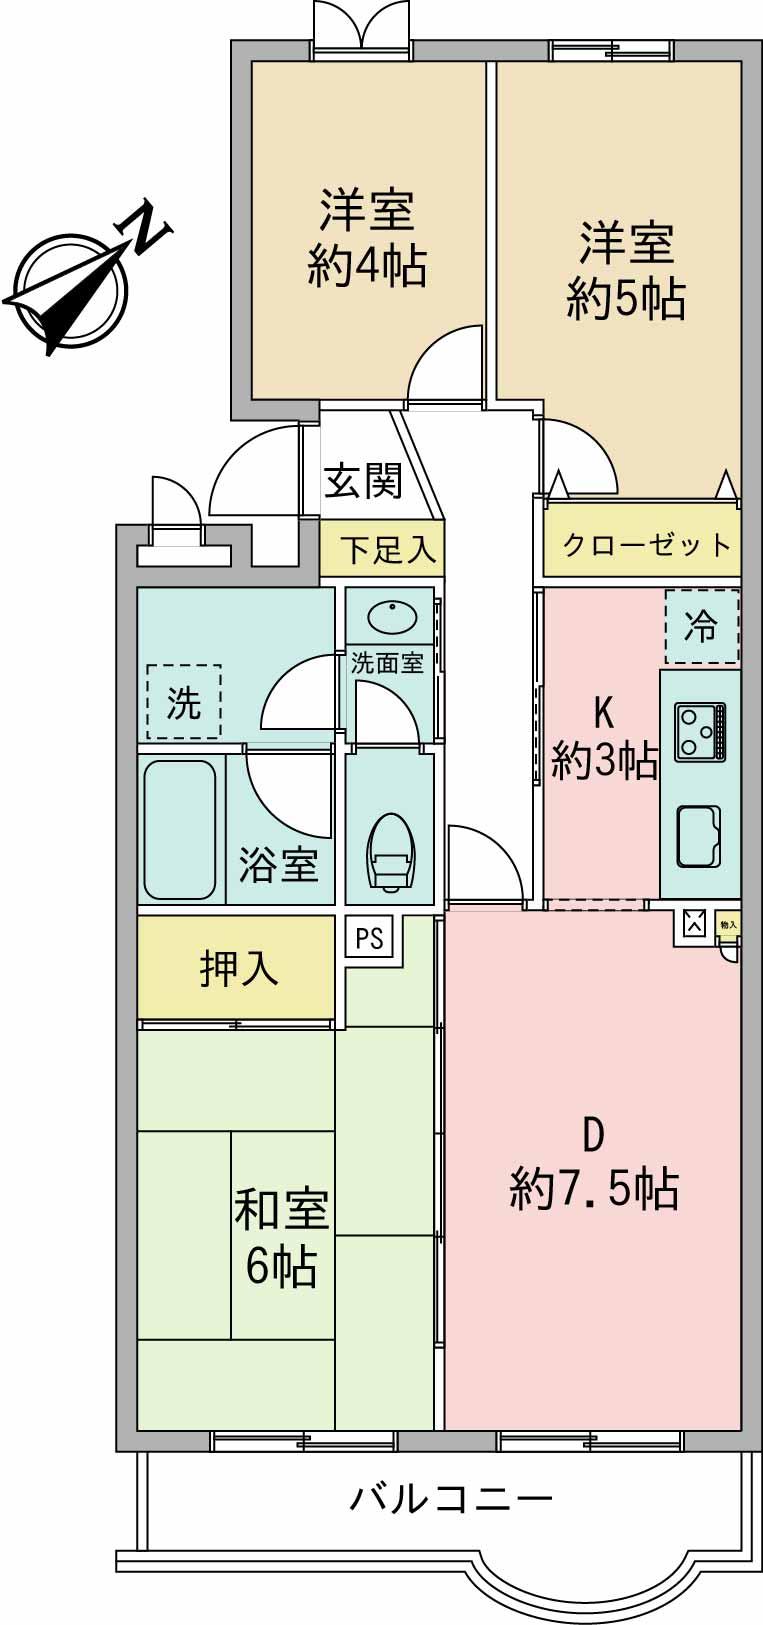 Floor plan. 3DK, Price 9.8 million yen, Footprint 62.8 sq m , Balcony area 5.48 sq m